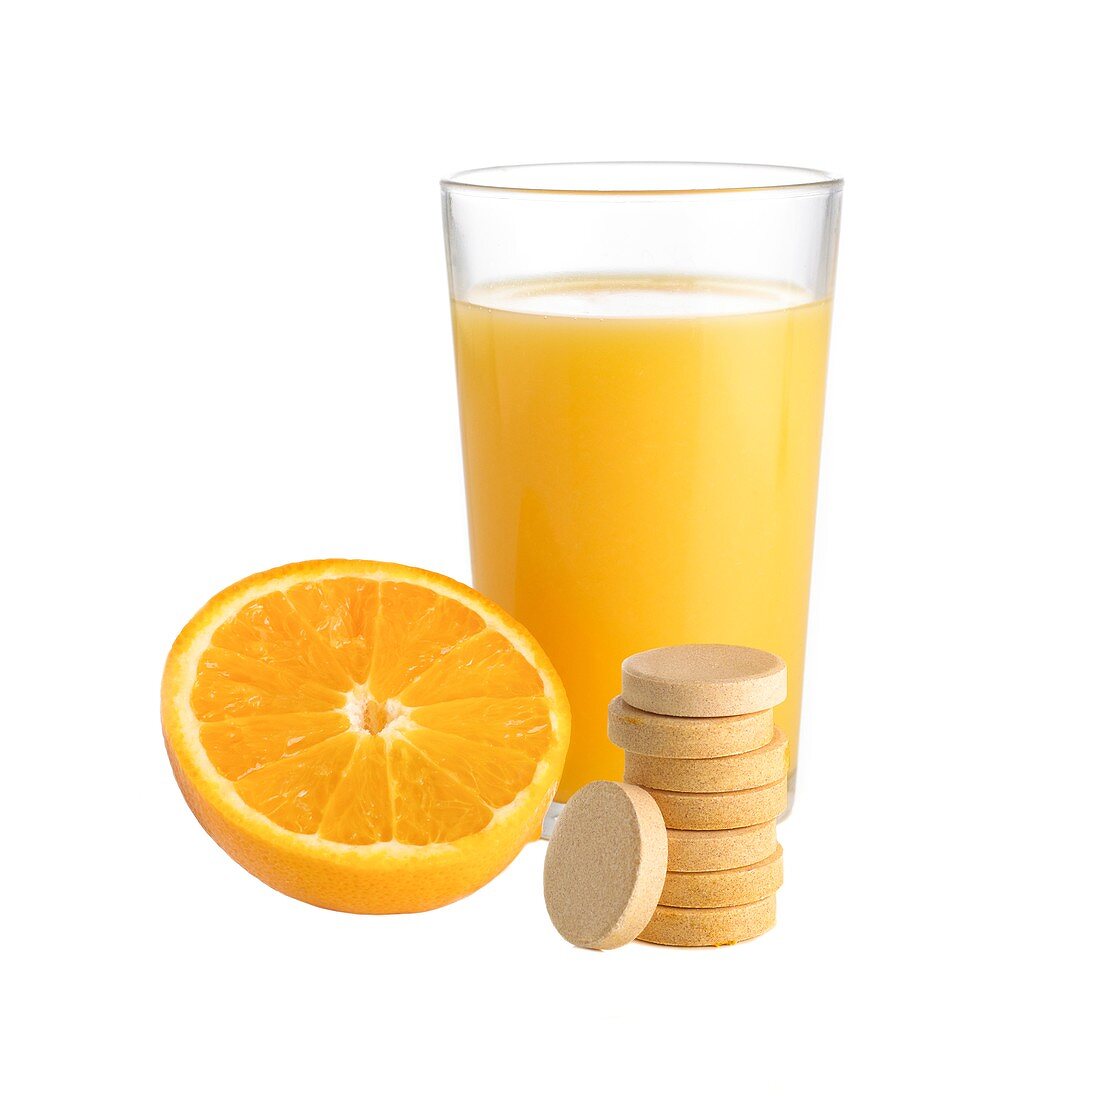 Orange juice,orange and vitamin c tablet